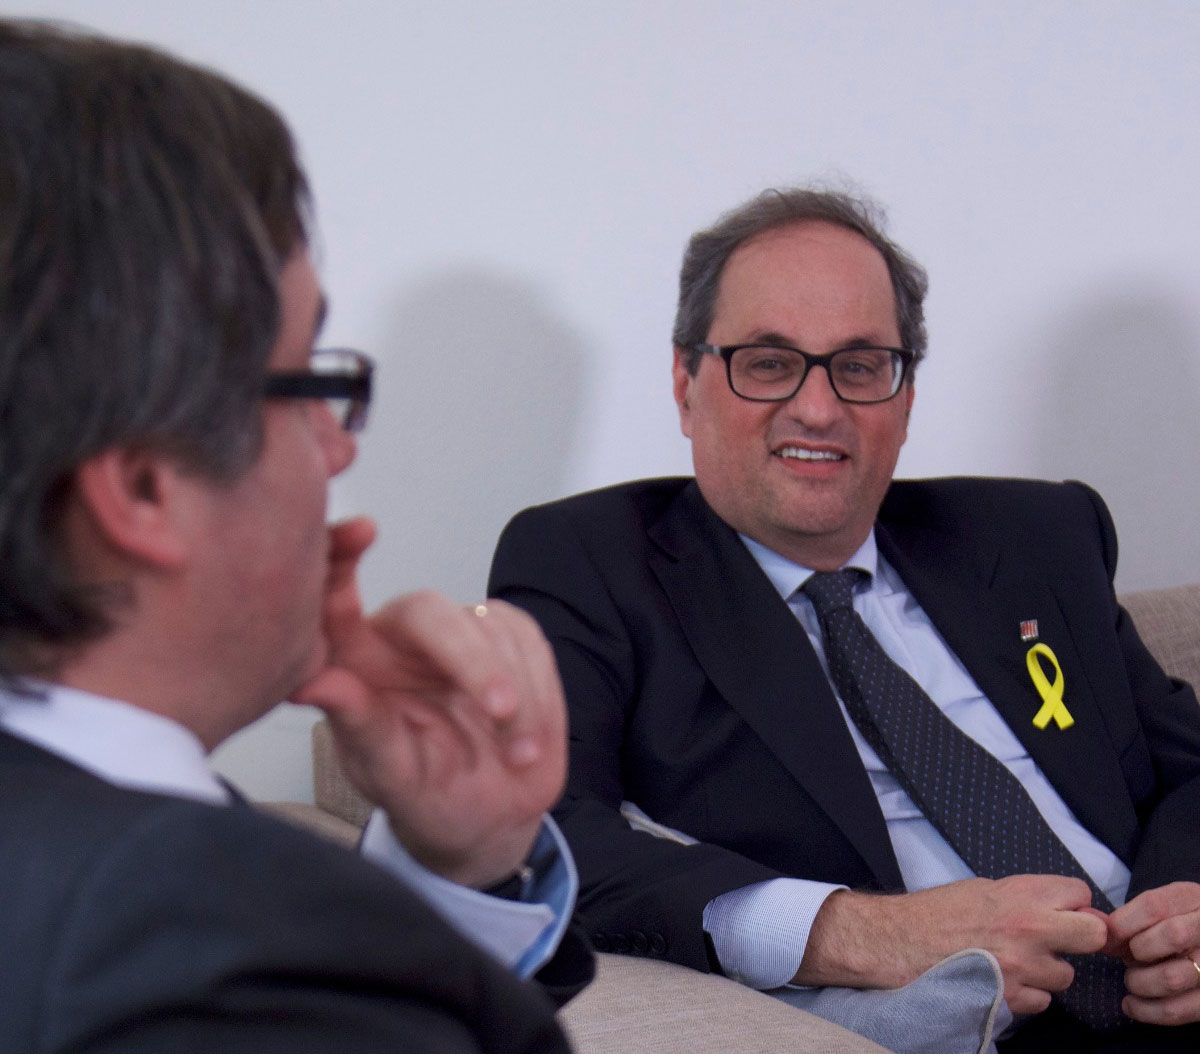 Quim Torra, candidato a la Generalitat, conversando con Carles Puigdemont